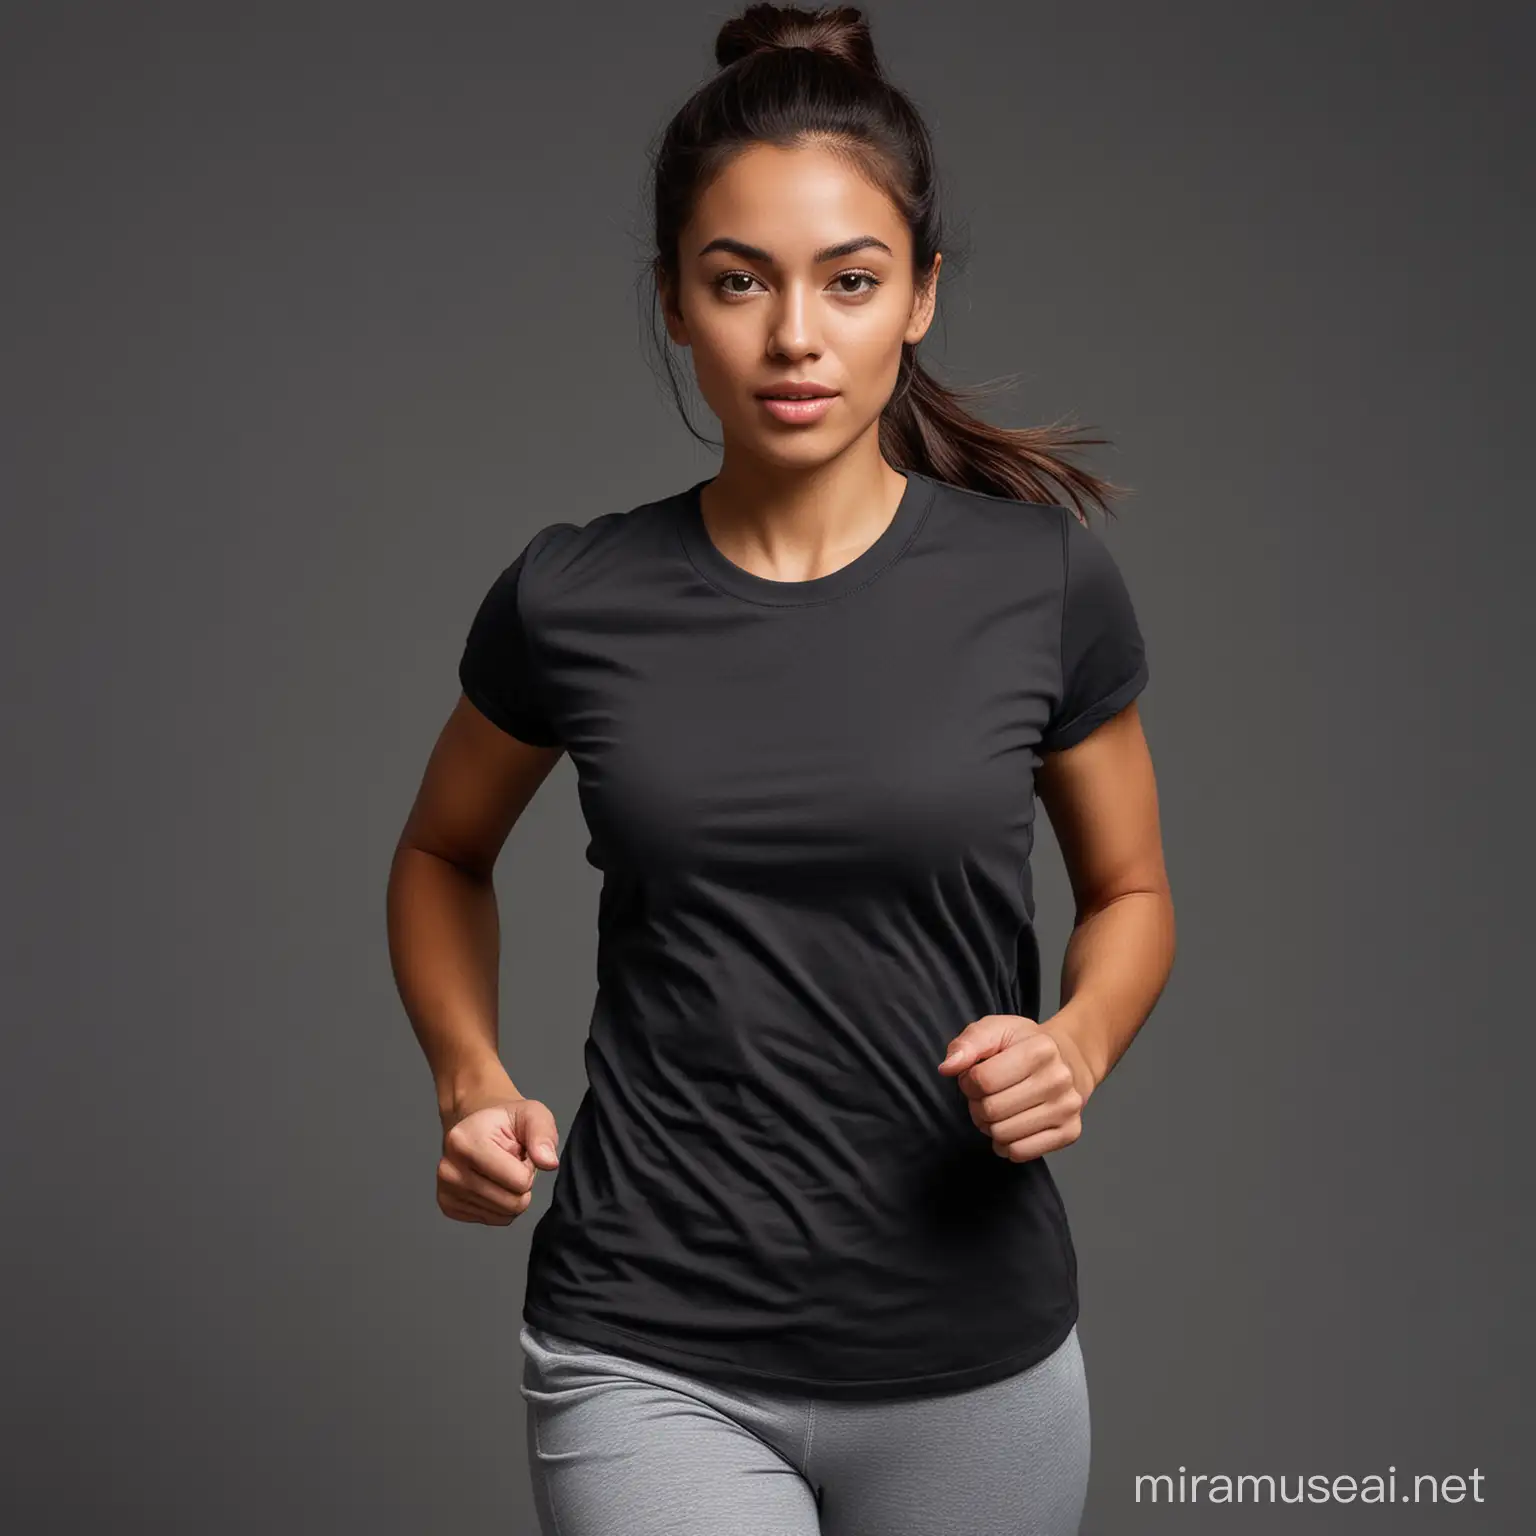 ethnic female jogging towards camera wearing plain solid black loose fitted unisex t-shirt, dark grey background